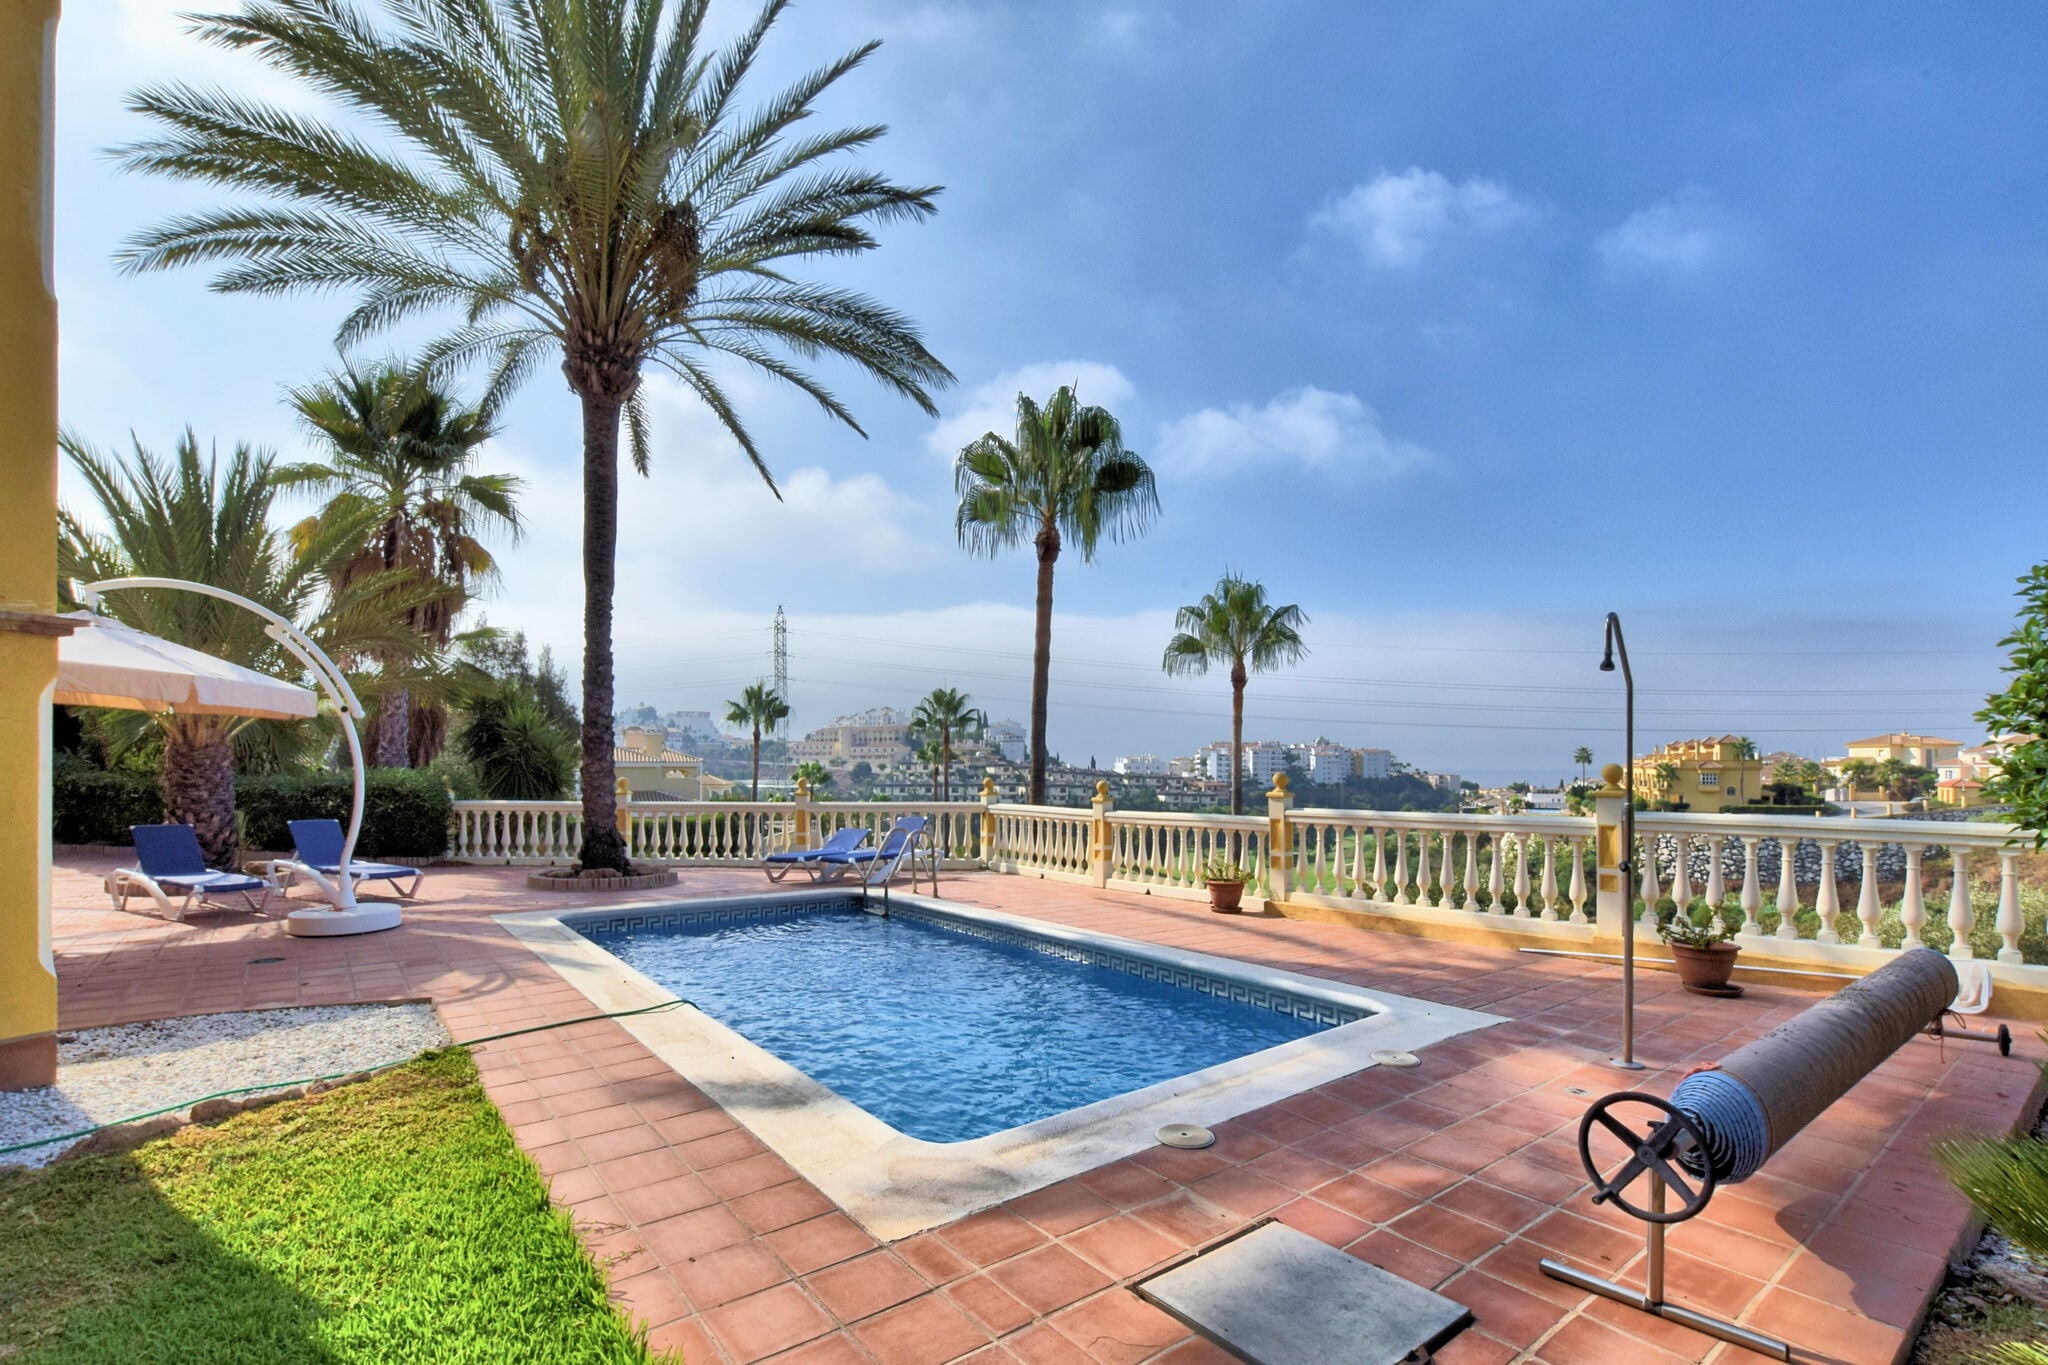 Komfortable Villa in Andalusien mit Swimmingpool